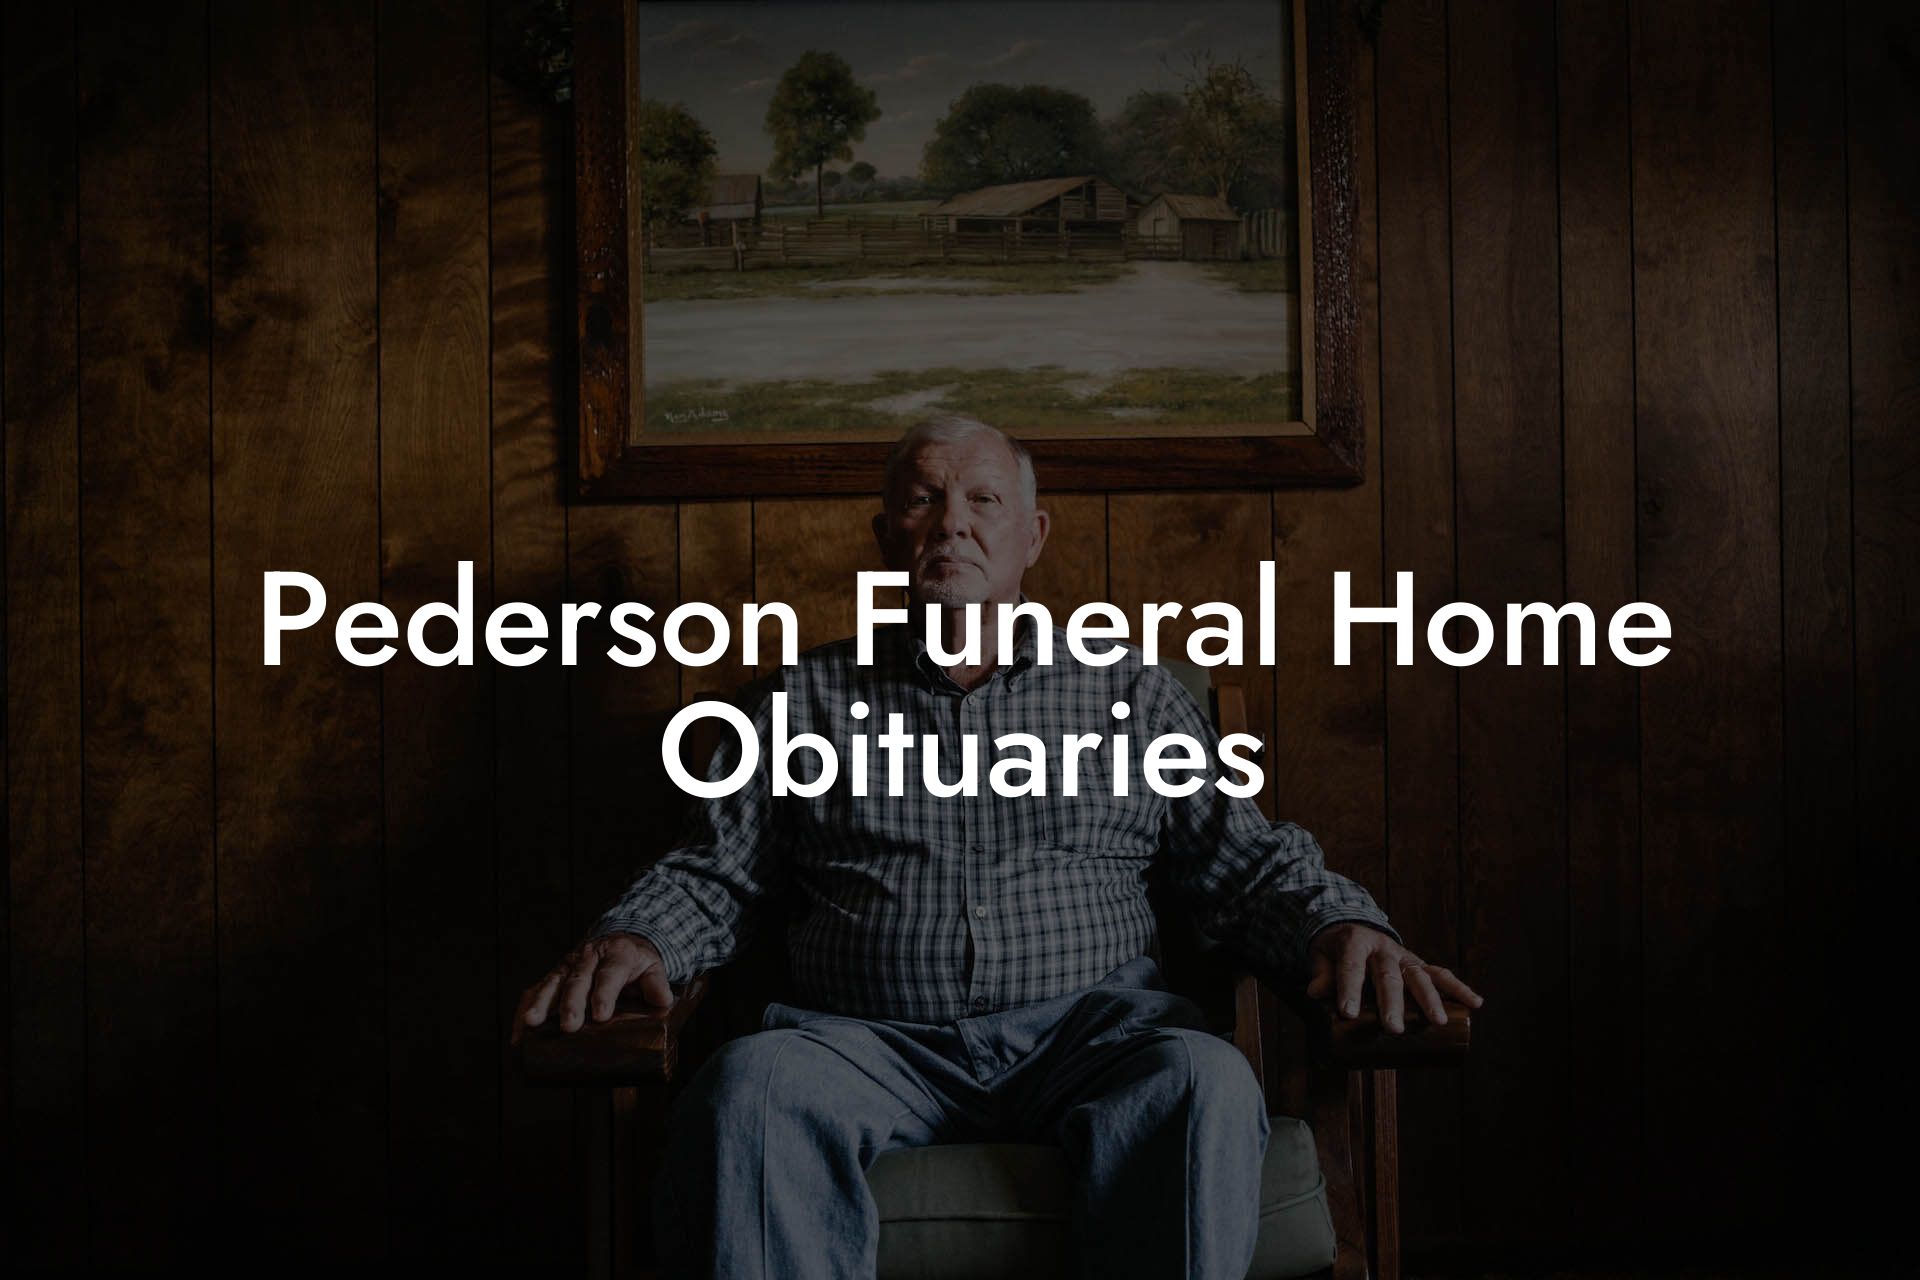 Pederson Funeral Home Obituaries